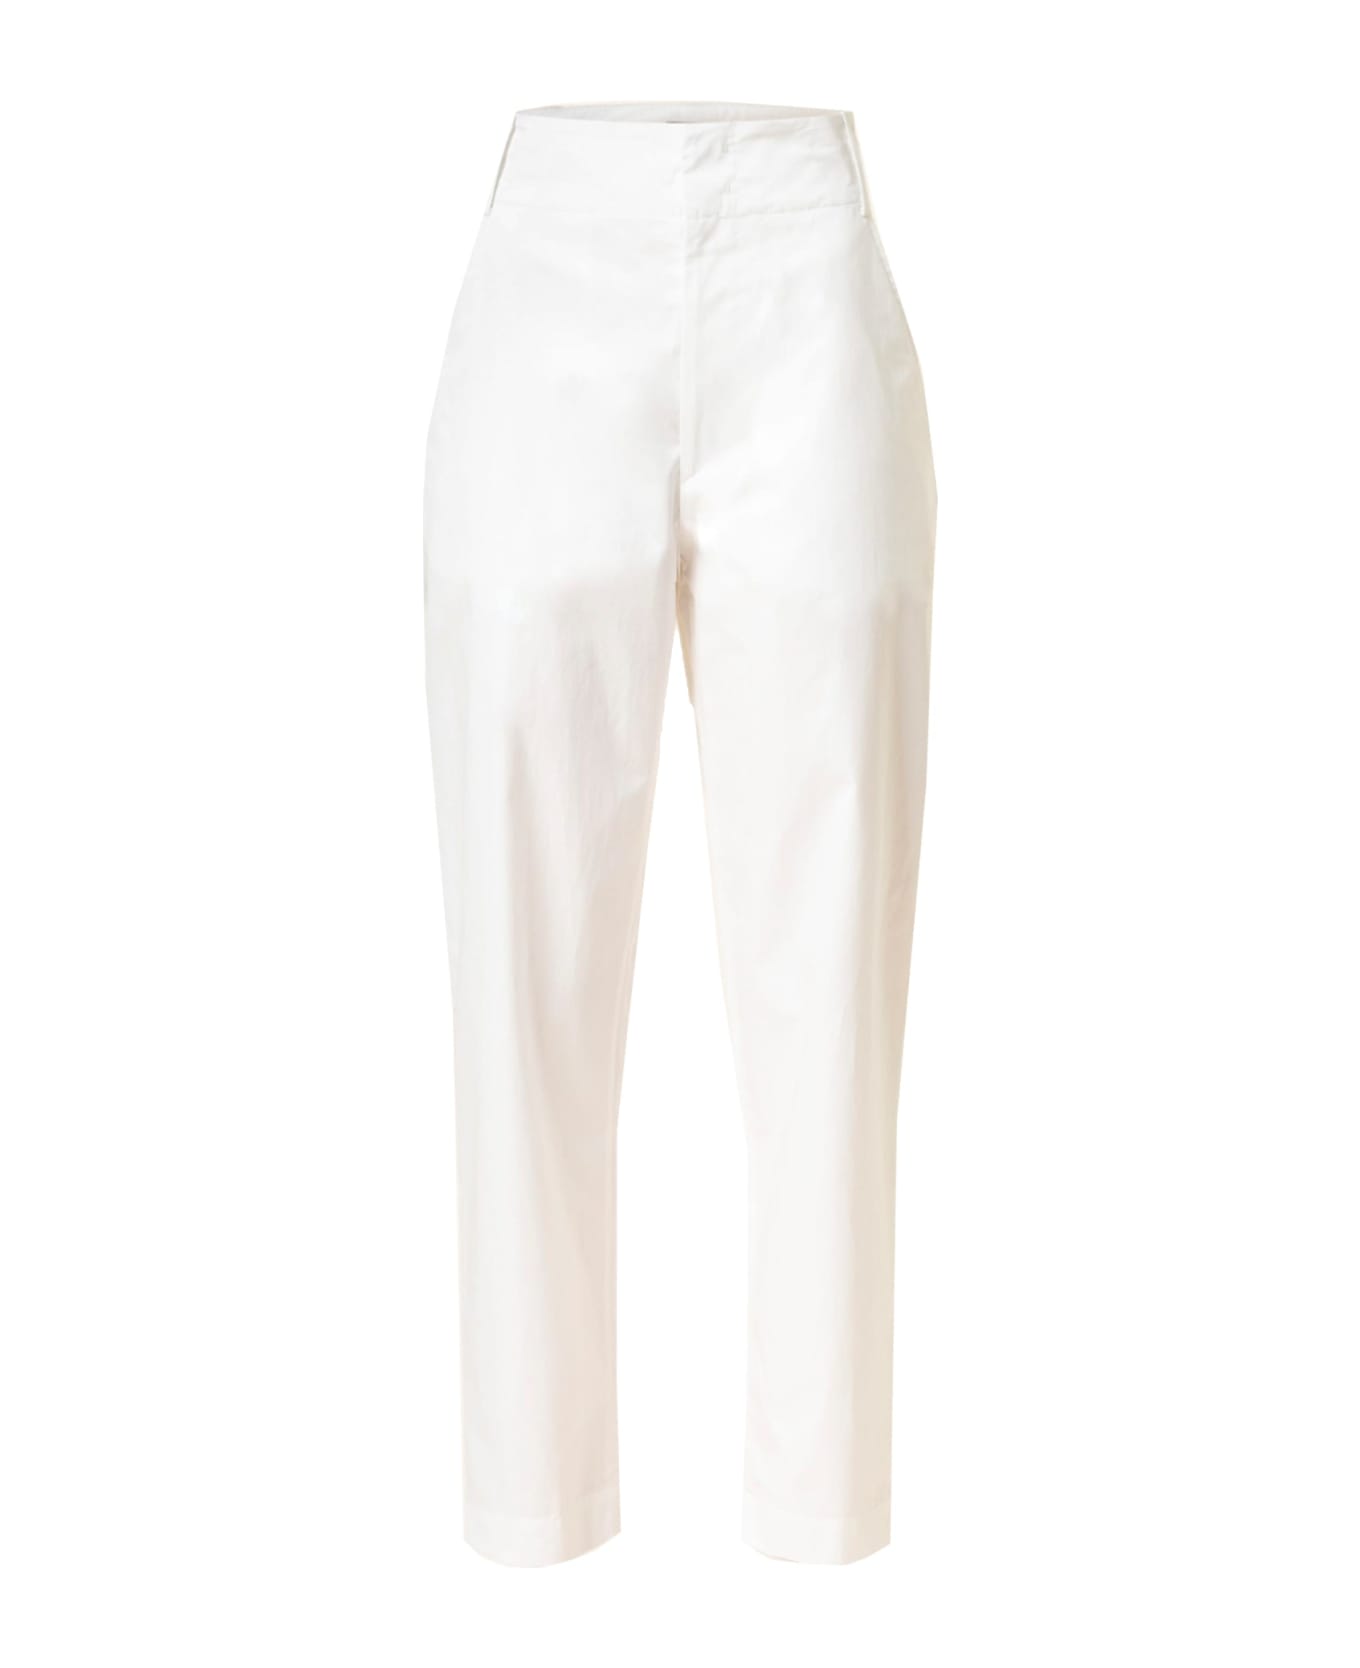 Marant Étoile Isabel Marant Etoil Nestoe Cotton Pants - White ボトムス